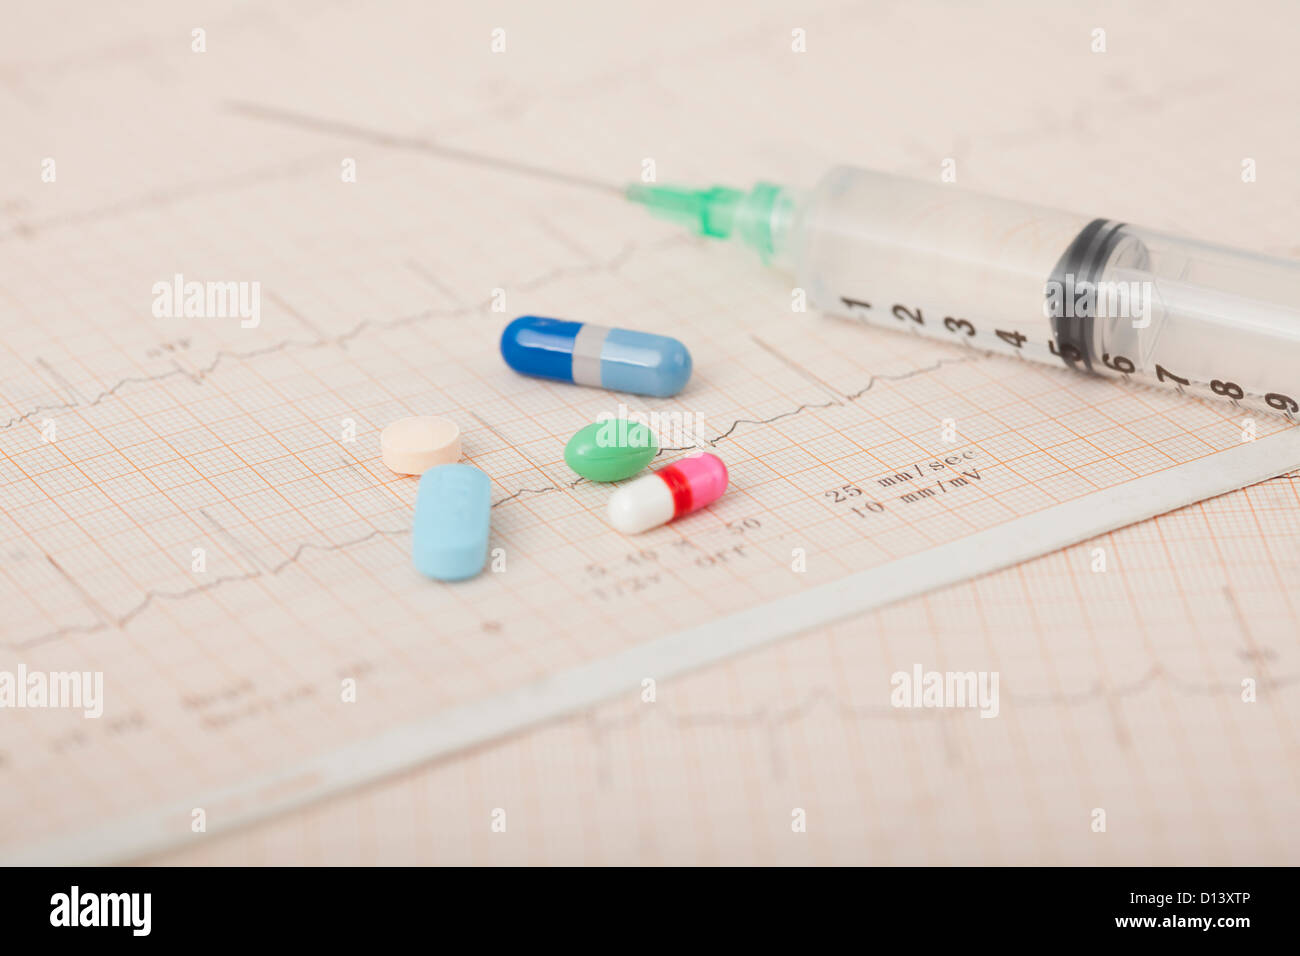 USA, Illinois, Metamora, Close up of medicines and syringe on medical record Stock Photo